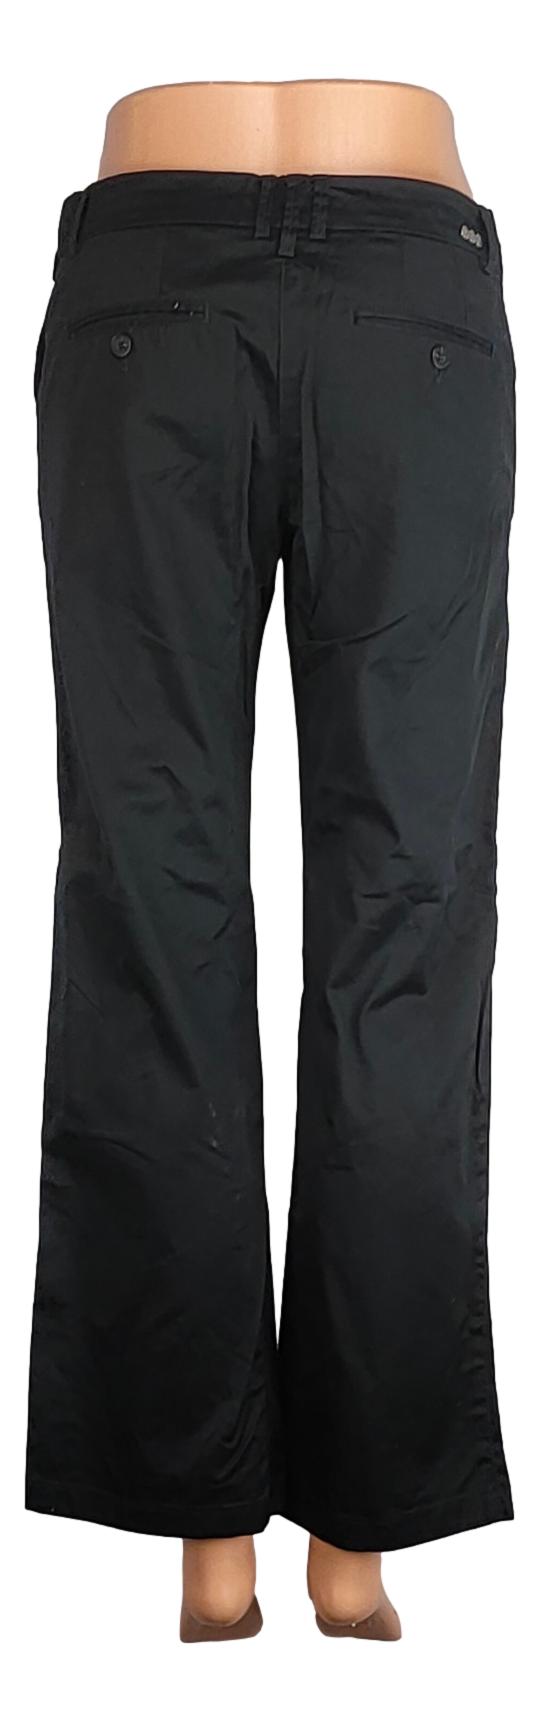 Pantalon MNG - Taille 40